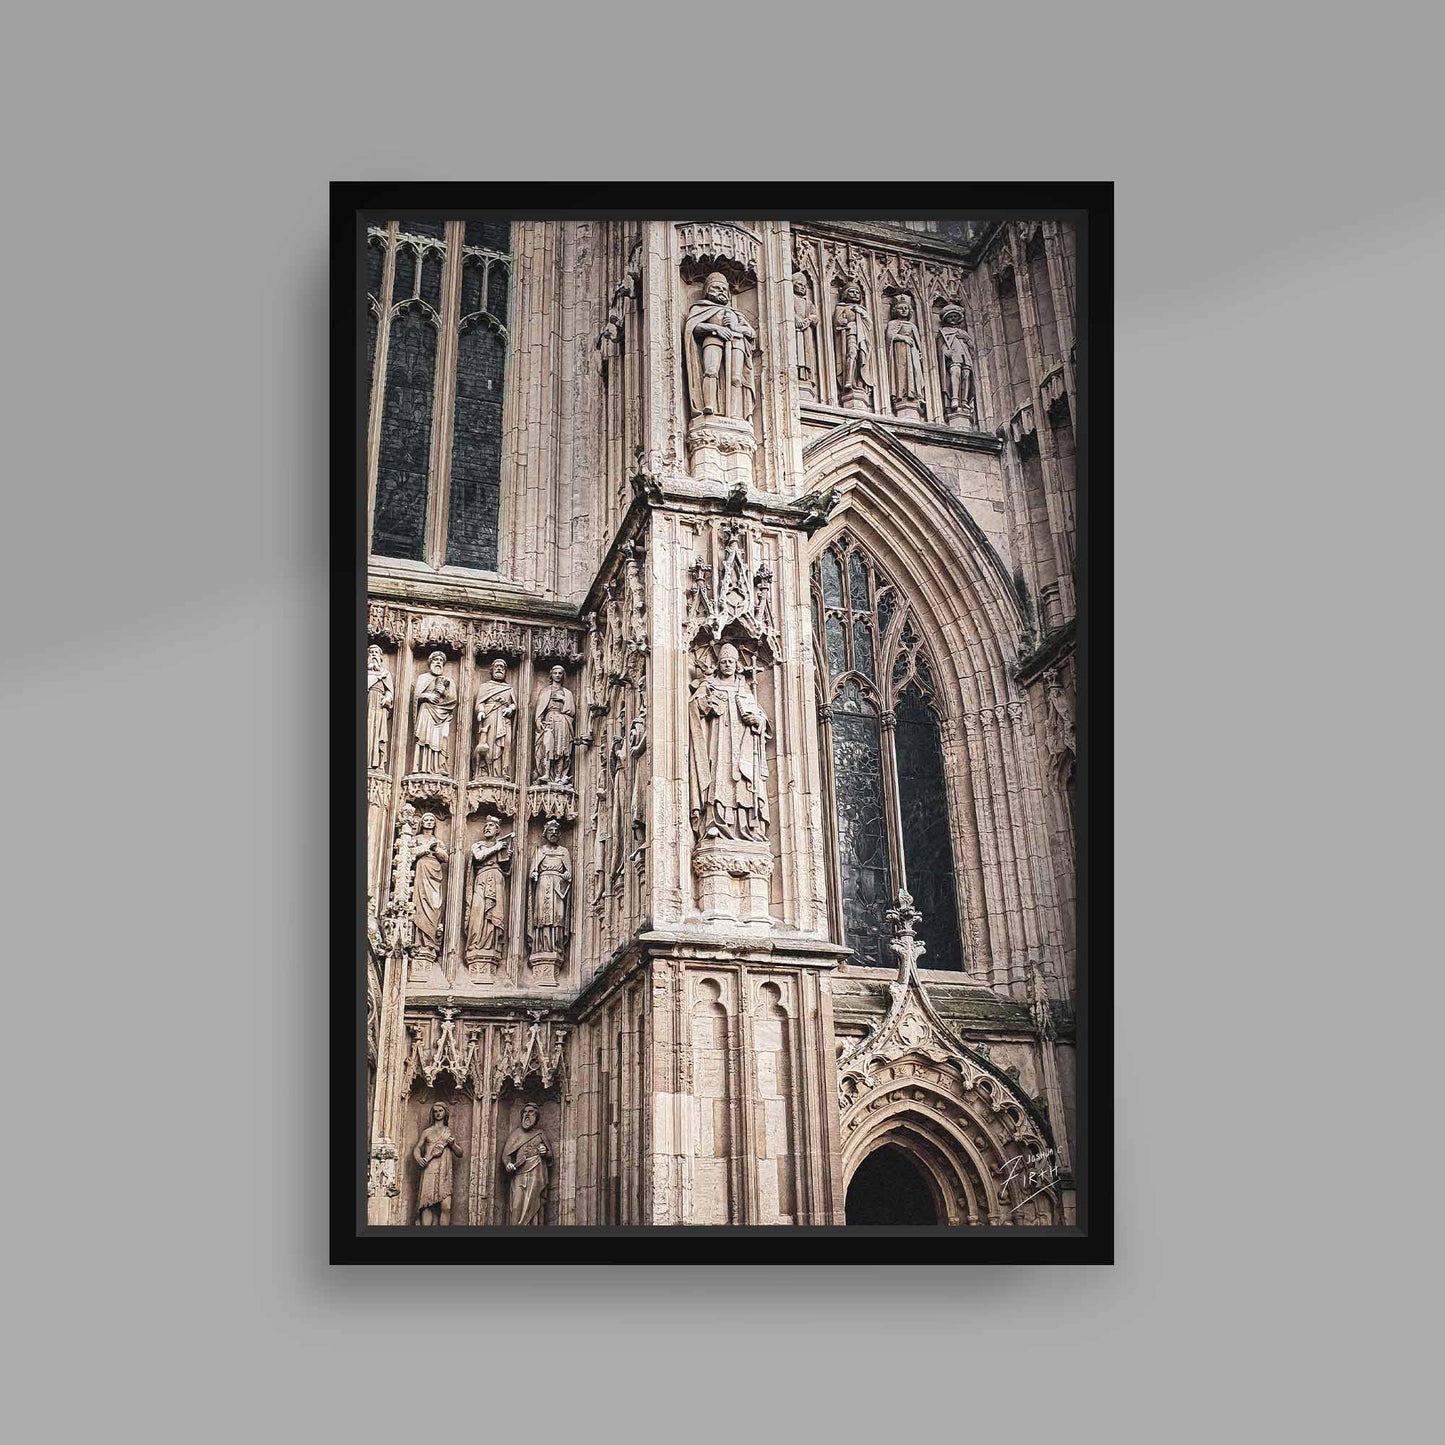 Beverley Minster Church of England Photograph Print